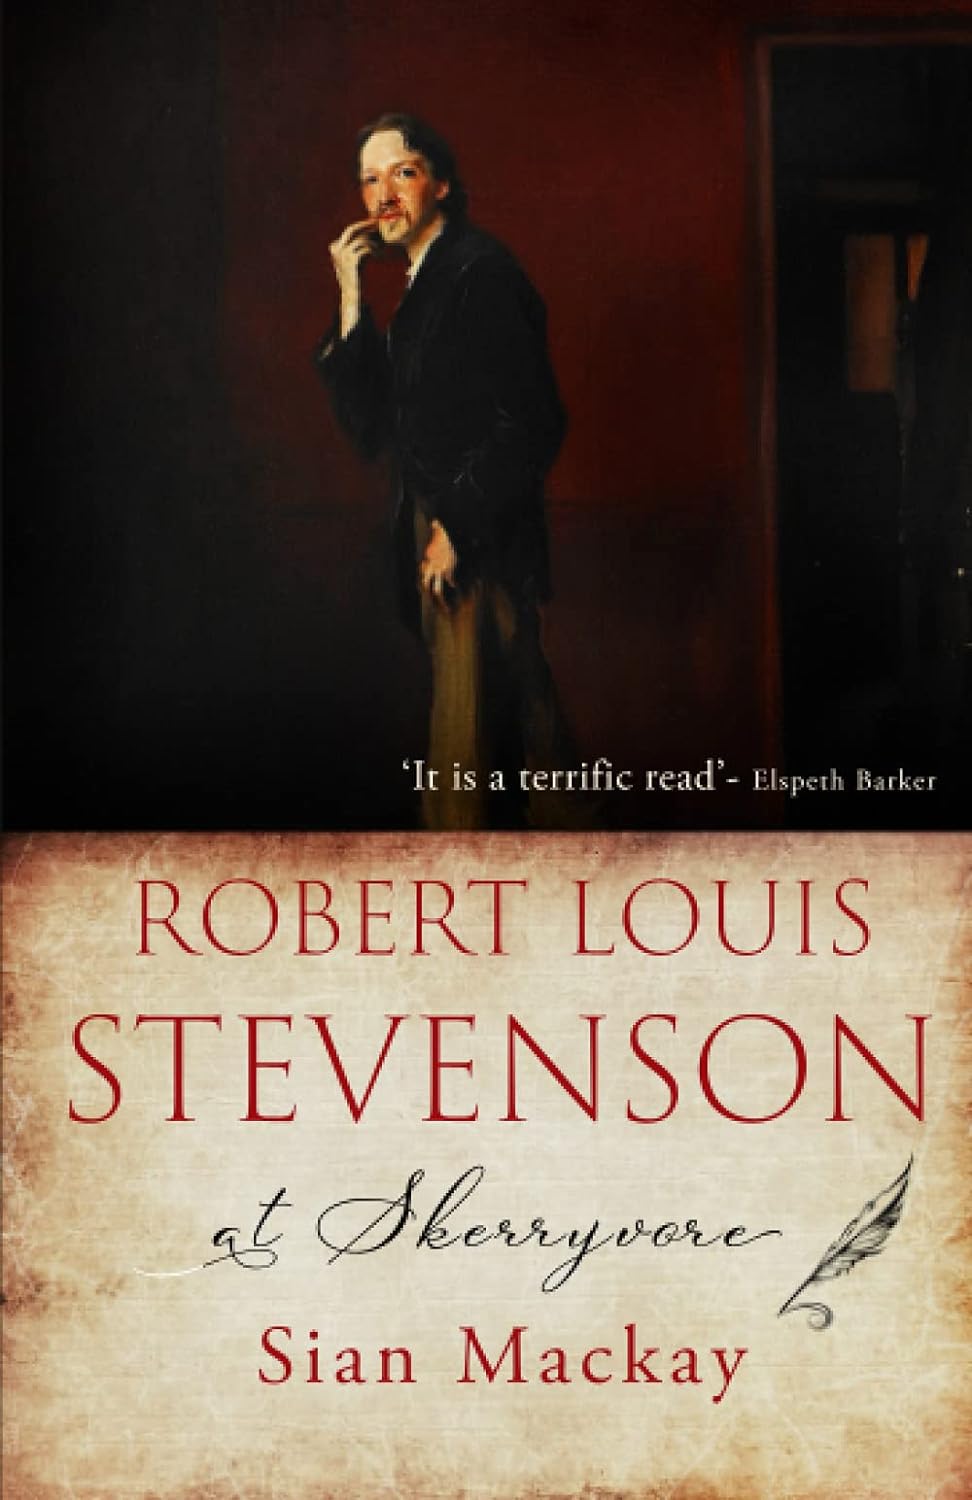 Robert Louis Stevenson at Skerryvore